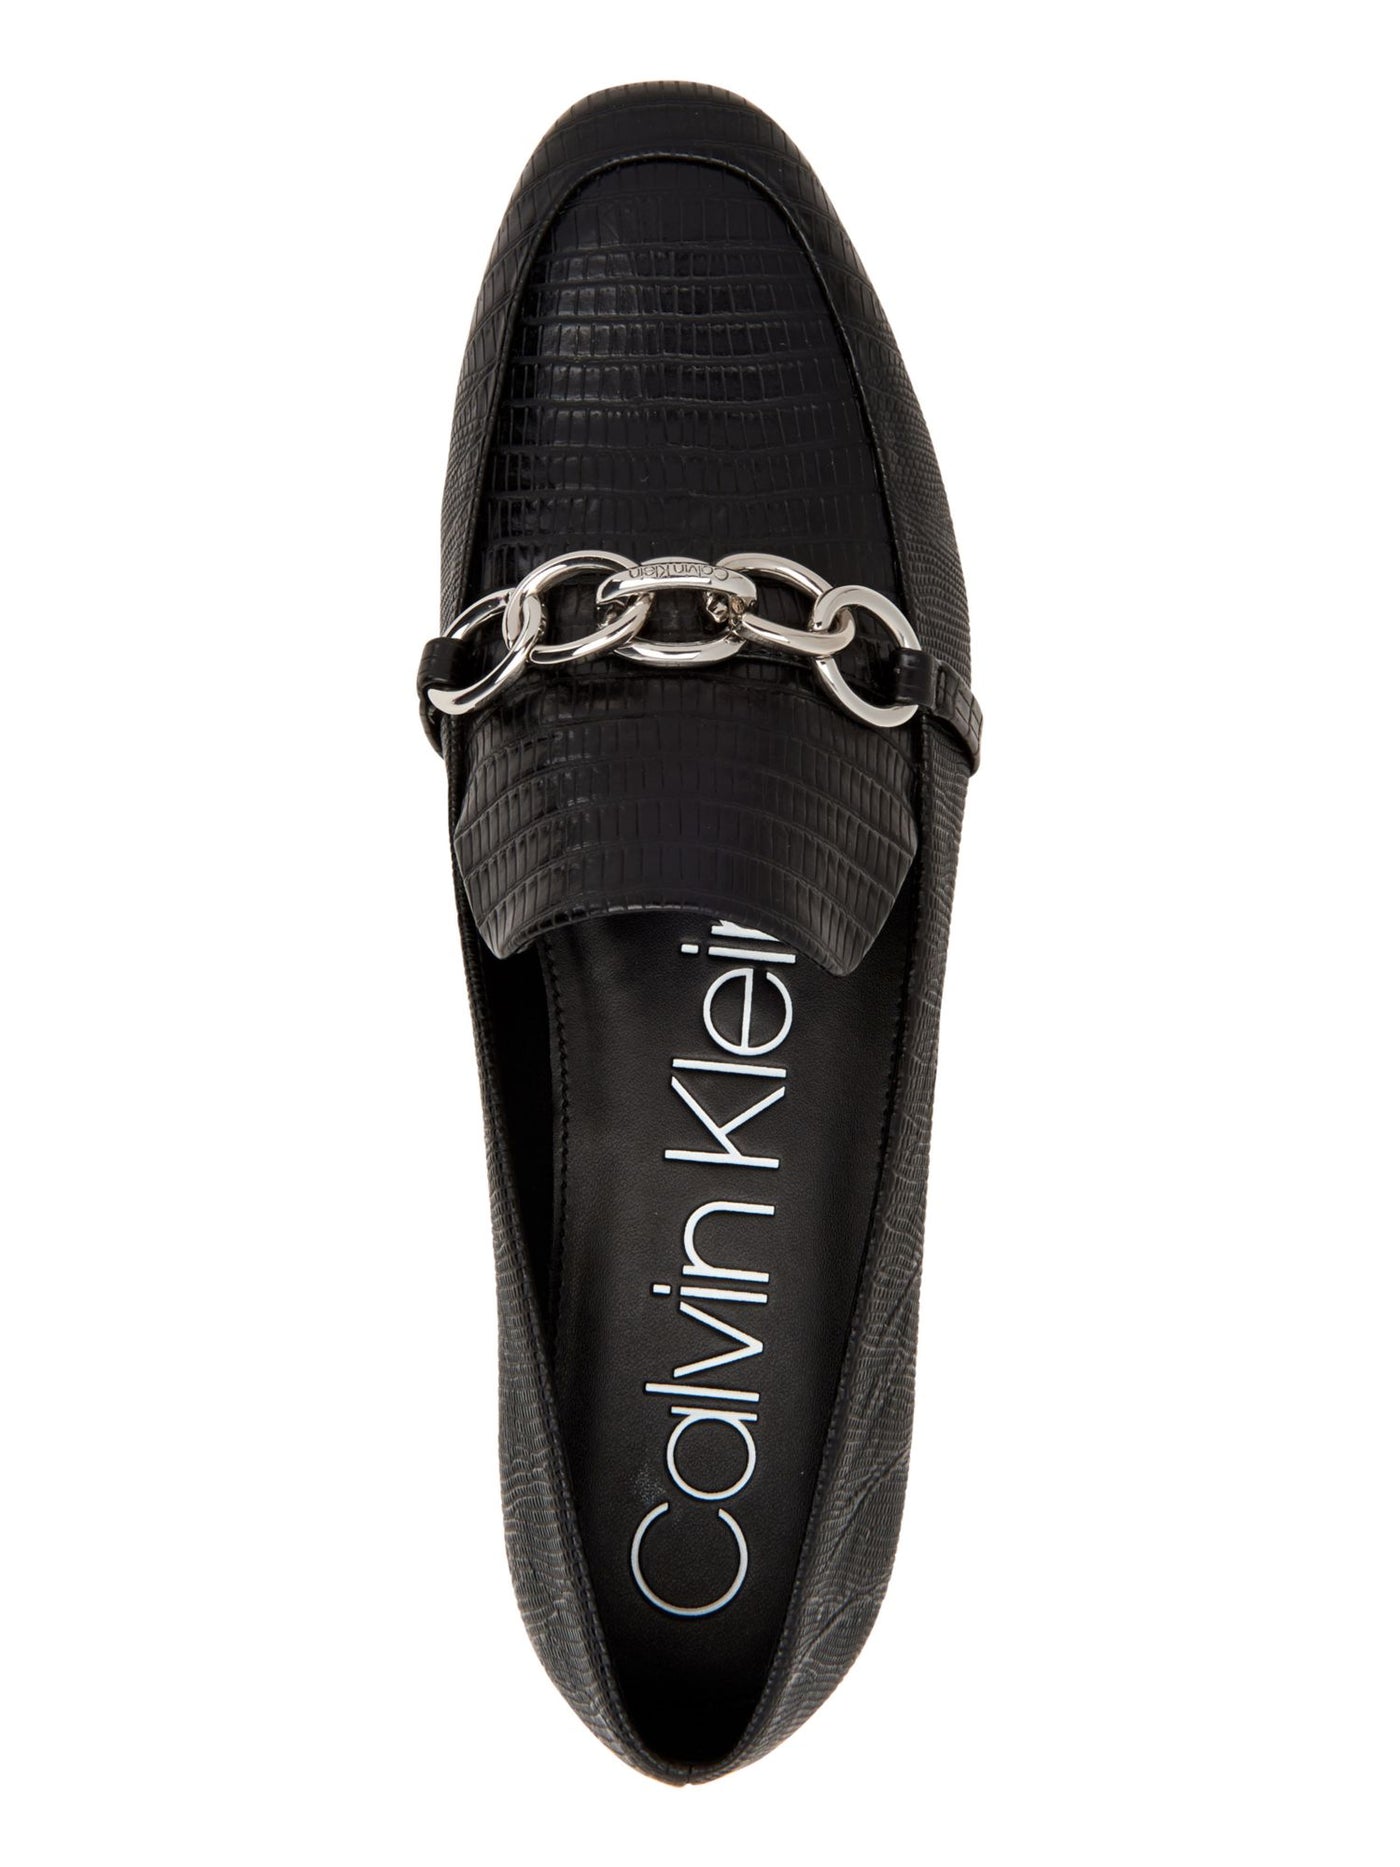 CALVIN KLEIN Womens Black Lizard Print Chain Link Accent Comfort Logo Banda Almond Toe Wedge Slip On Loafers Shoes 10 M